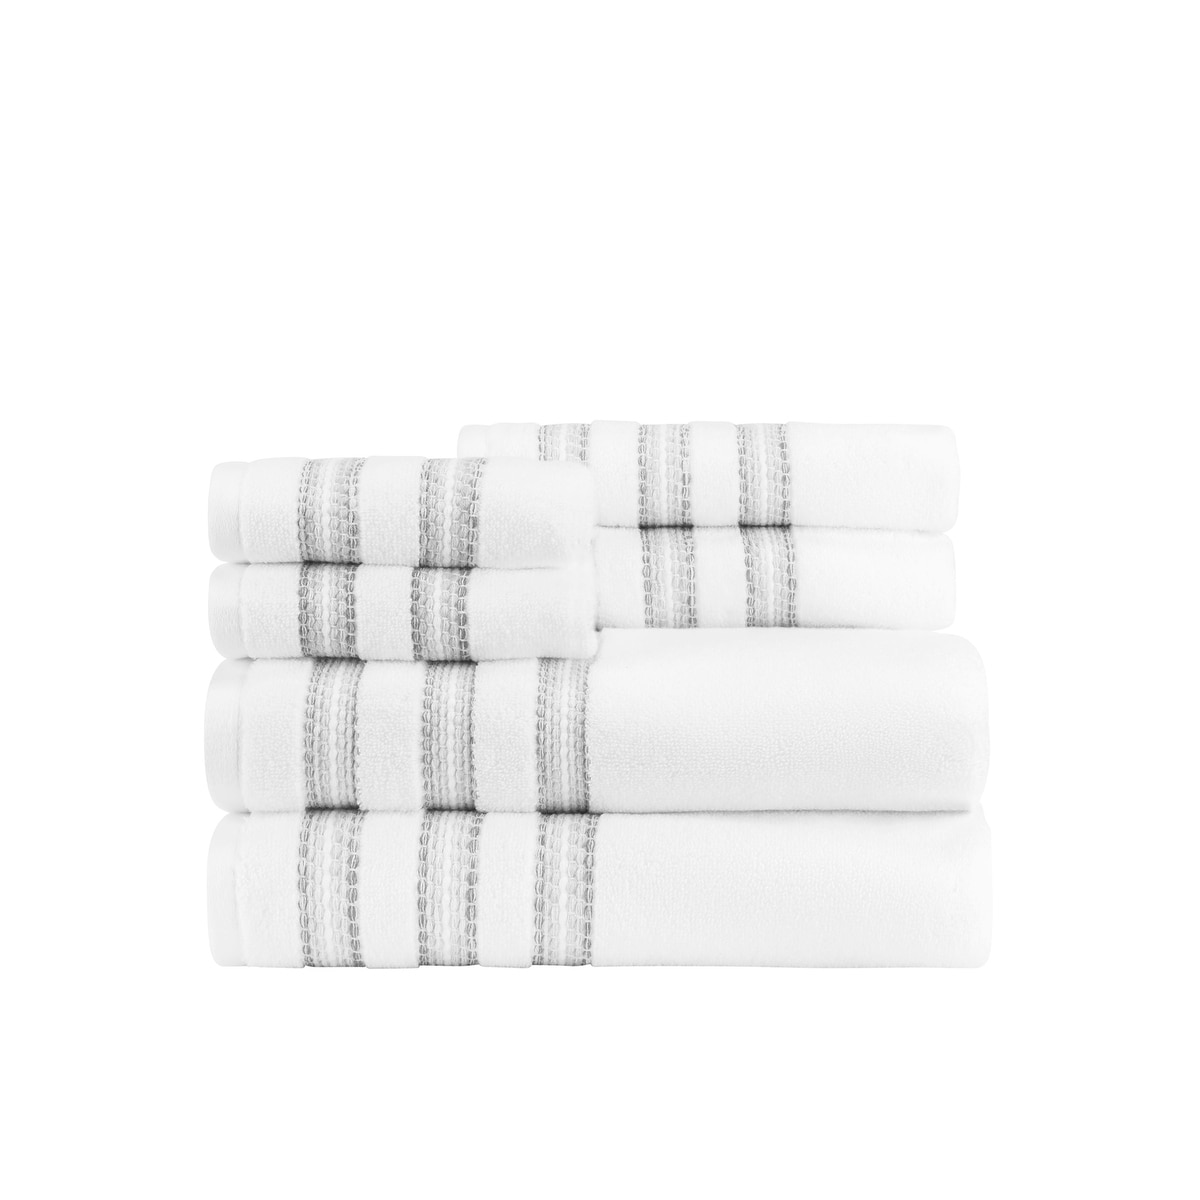  Caro Home Beacon 6-Piece Towel Set : Home & Kitchen